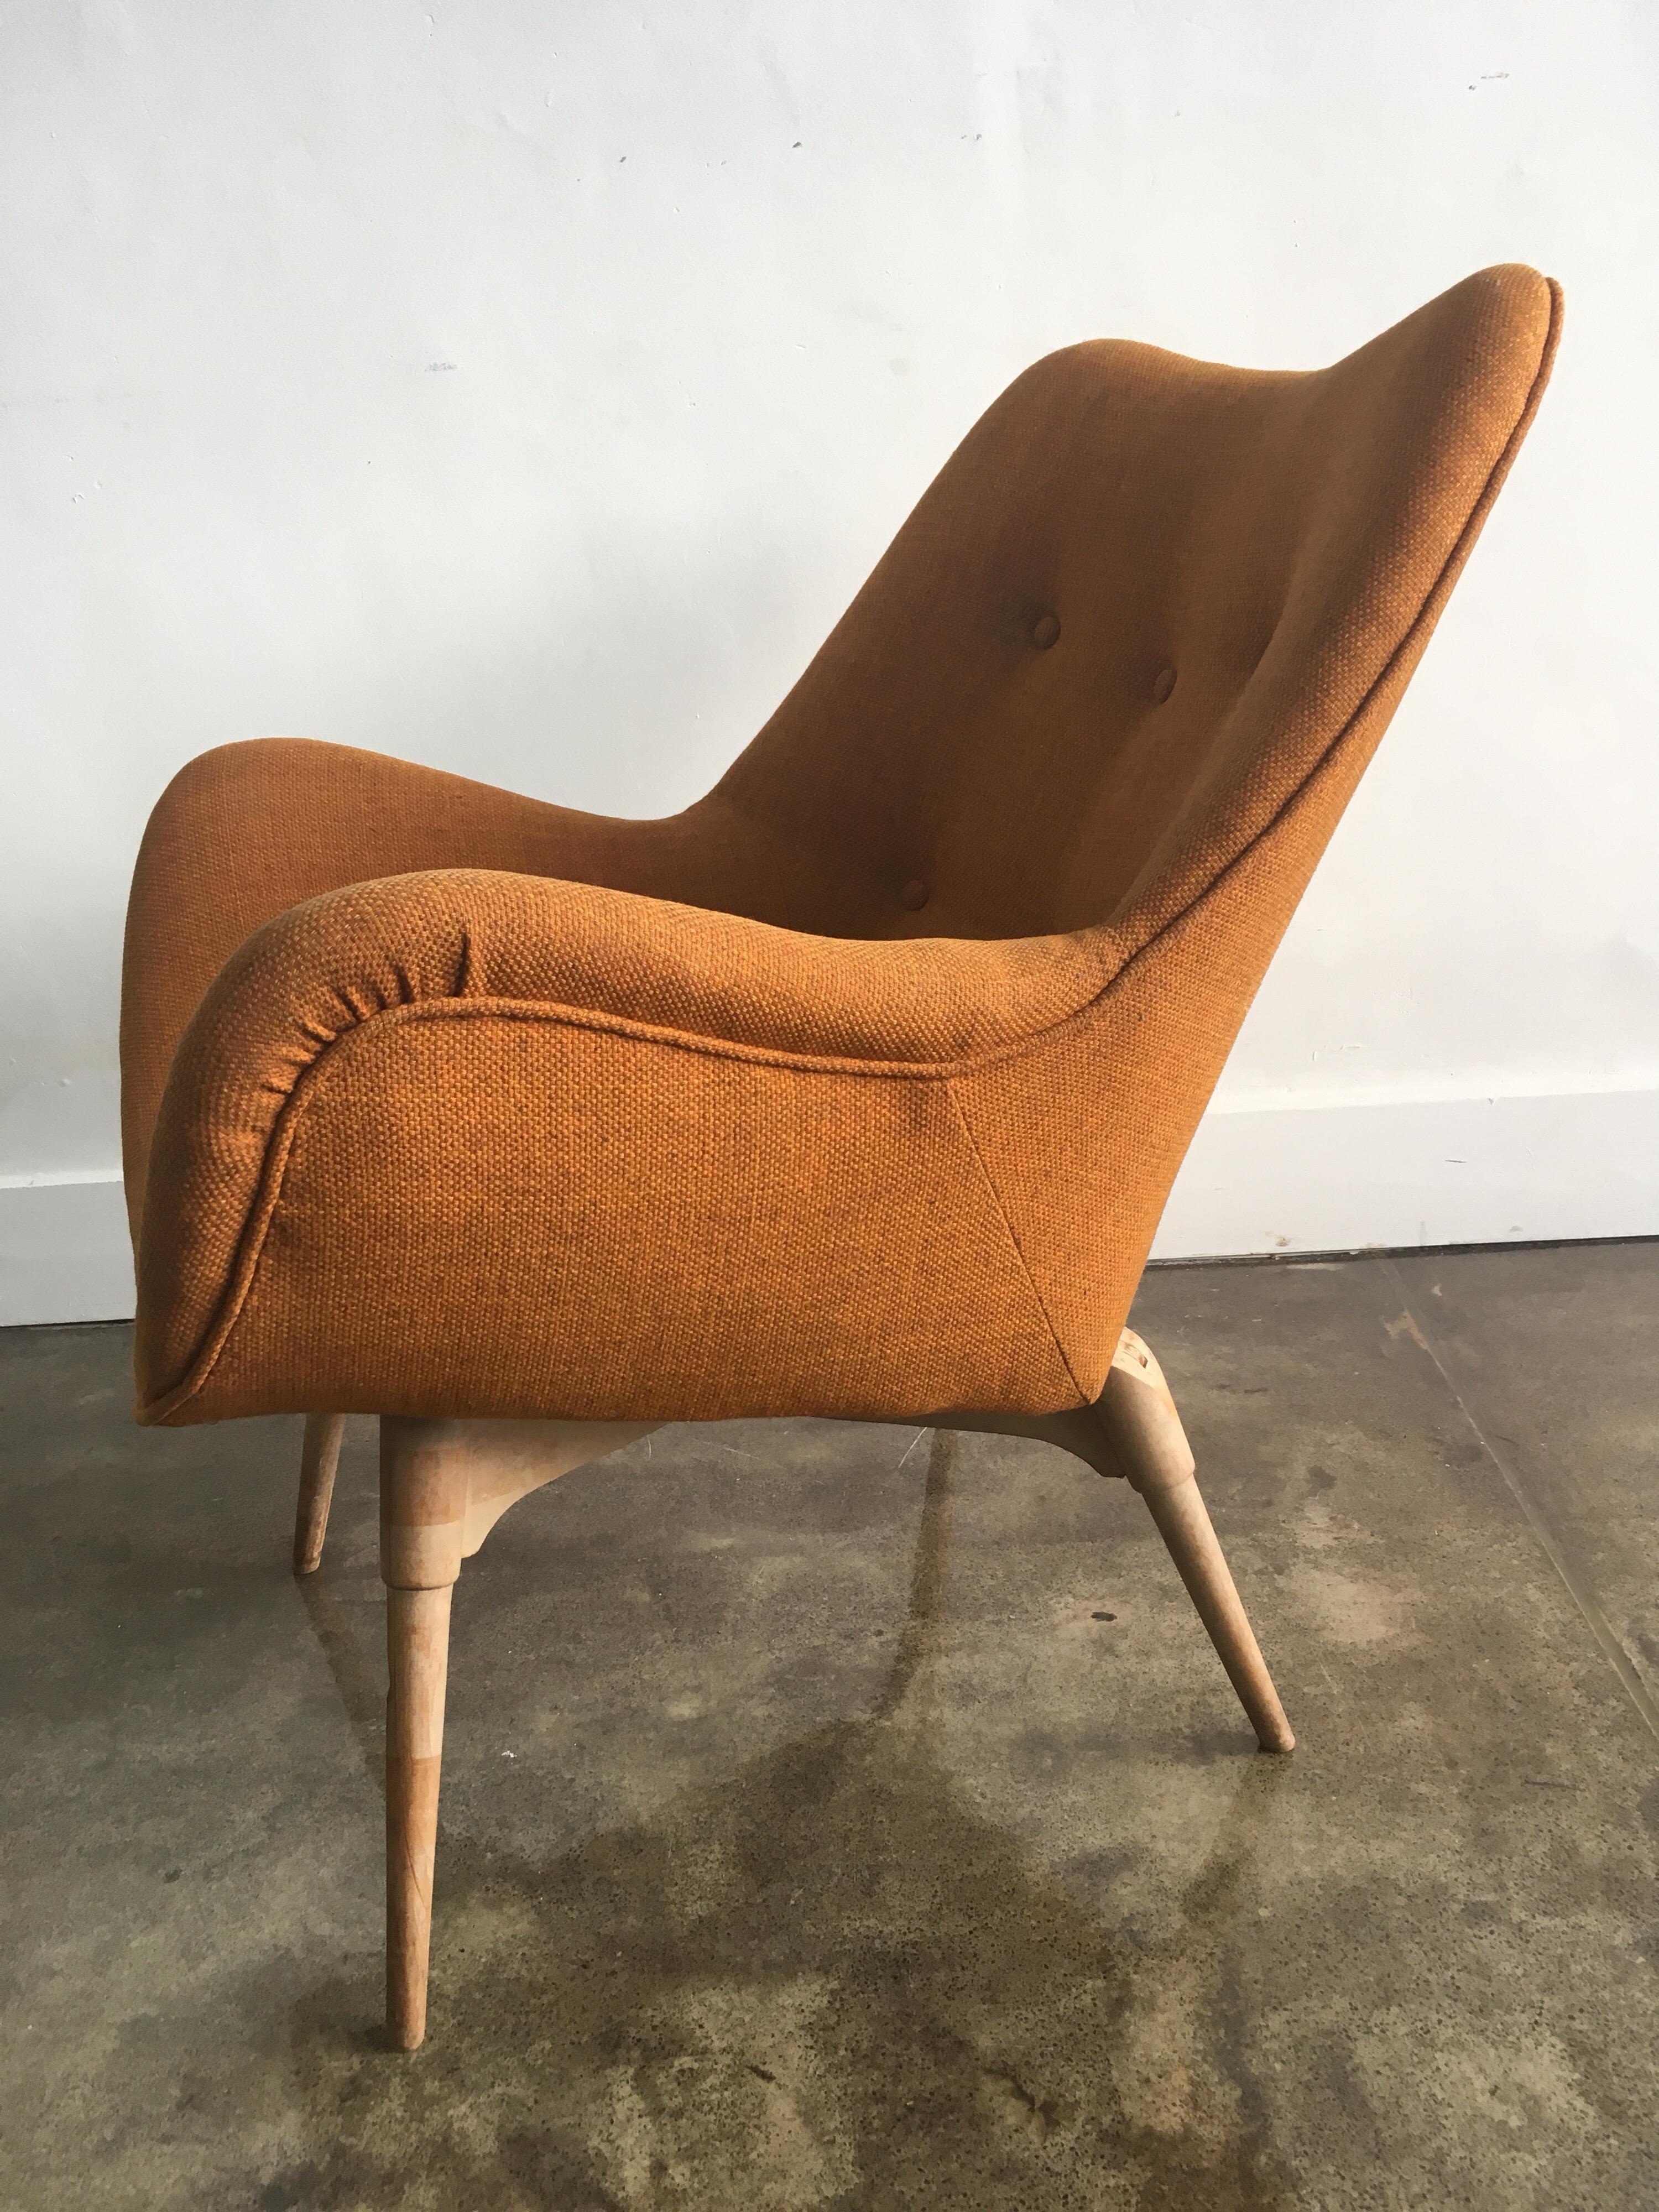 grant featherston chair original